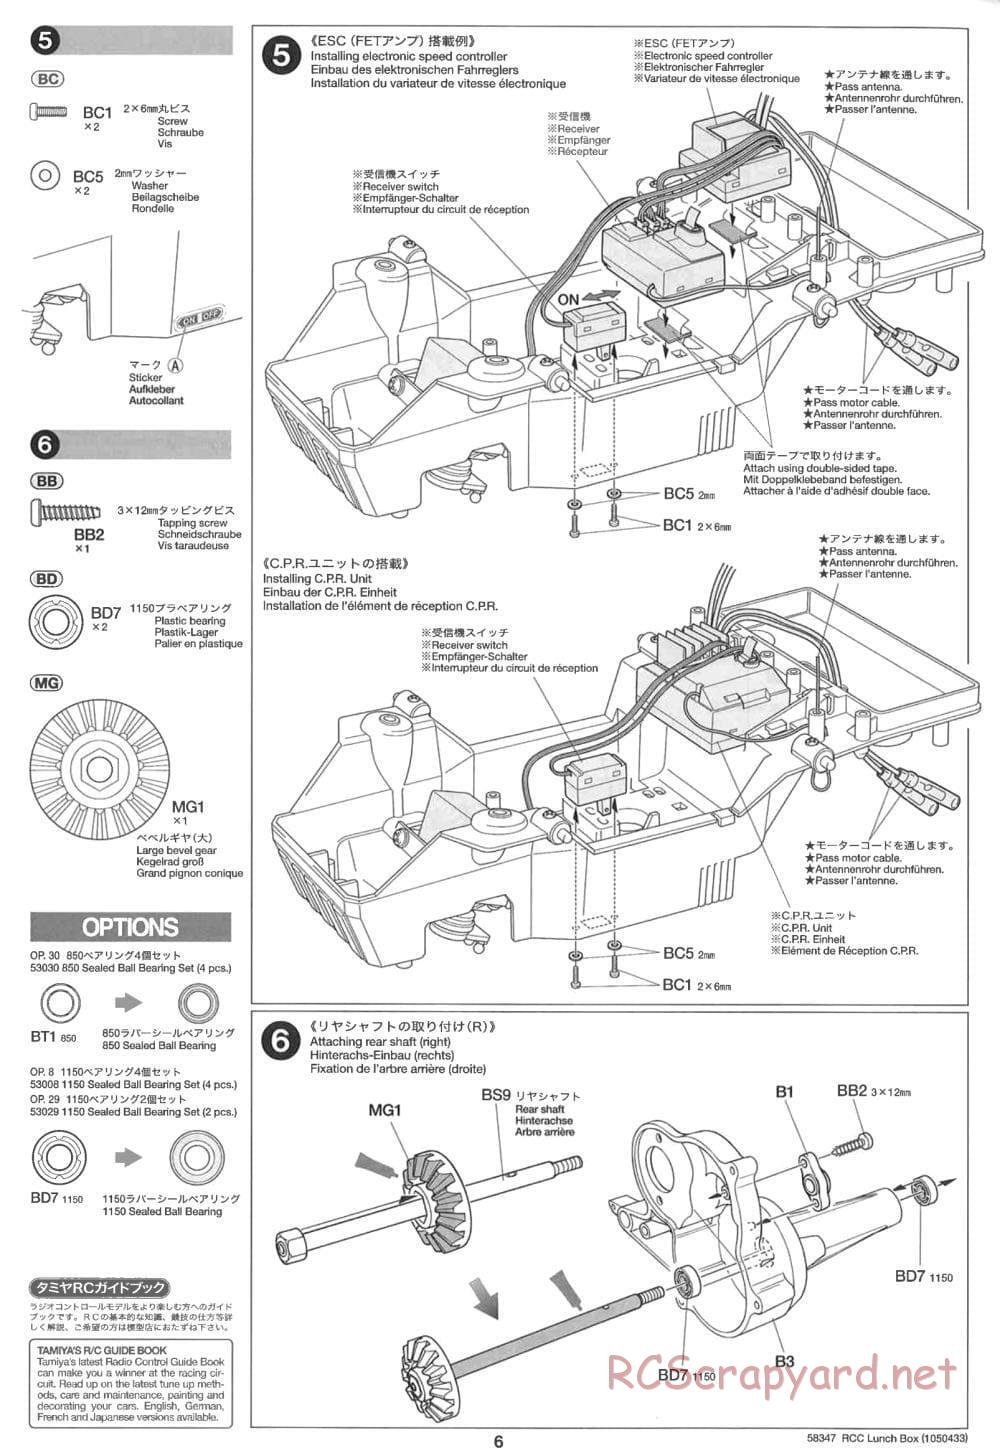 Tamiya - Vanessas Lunchbox - CW-01 Chassis - Manual - Page 6